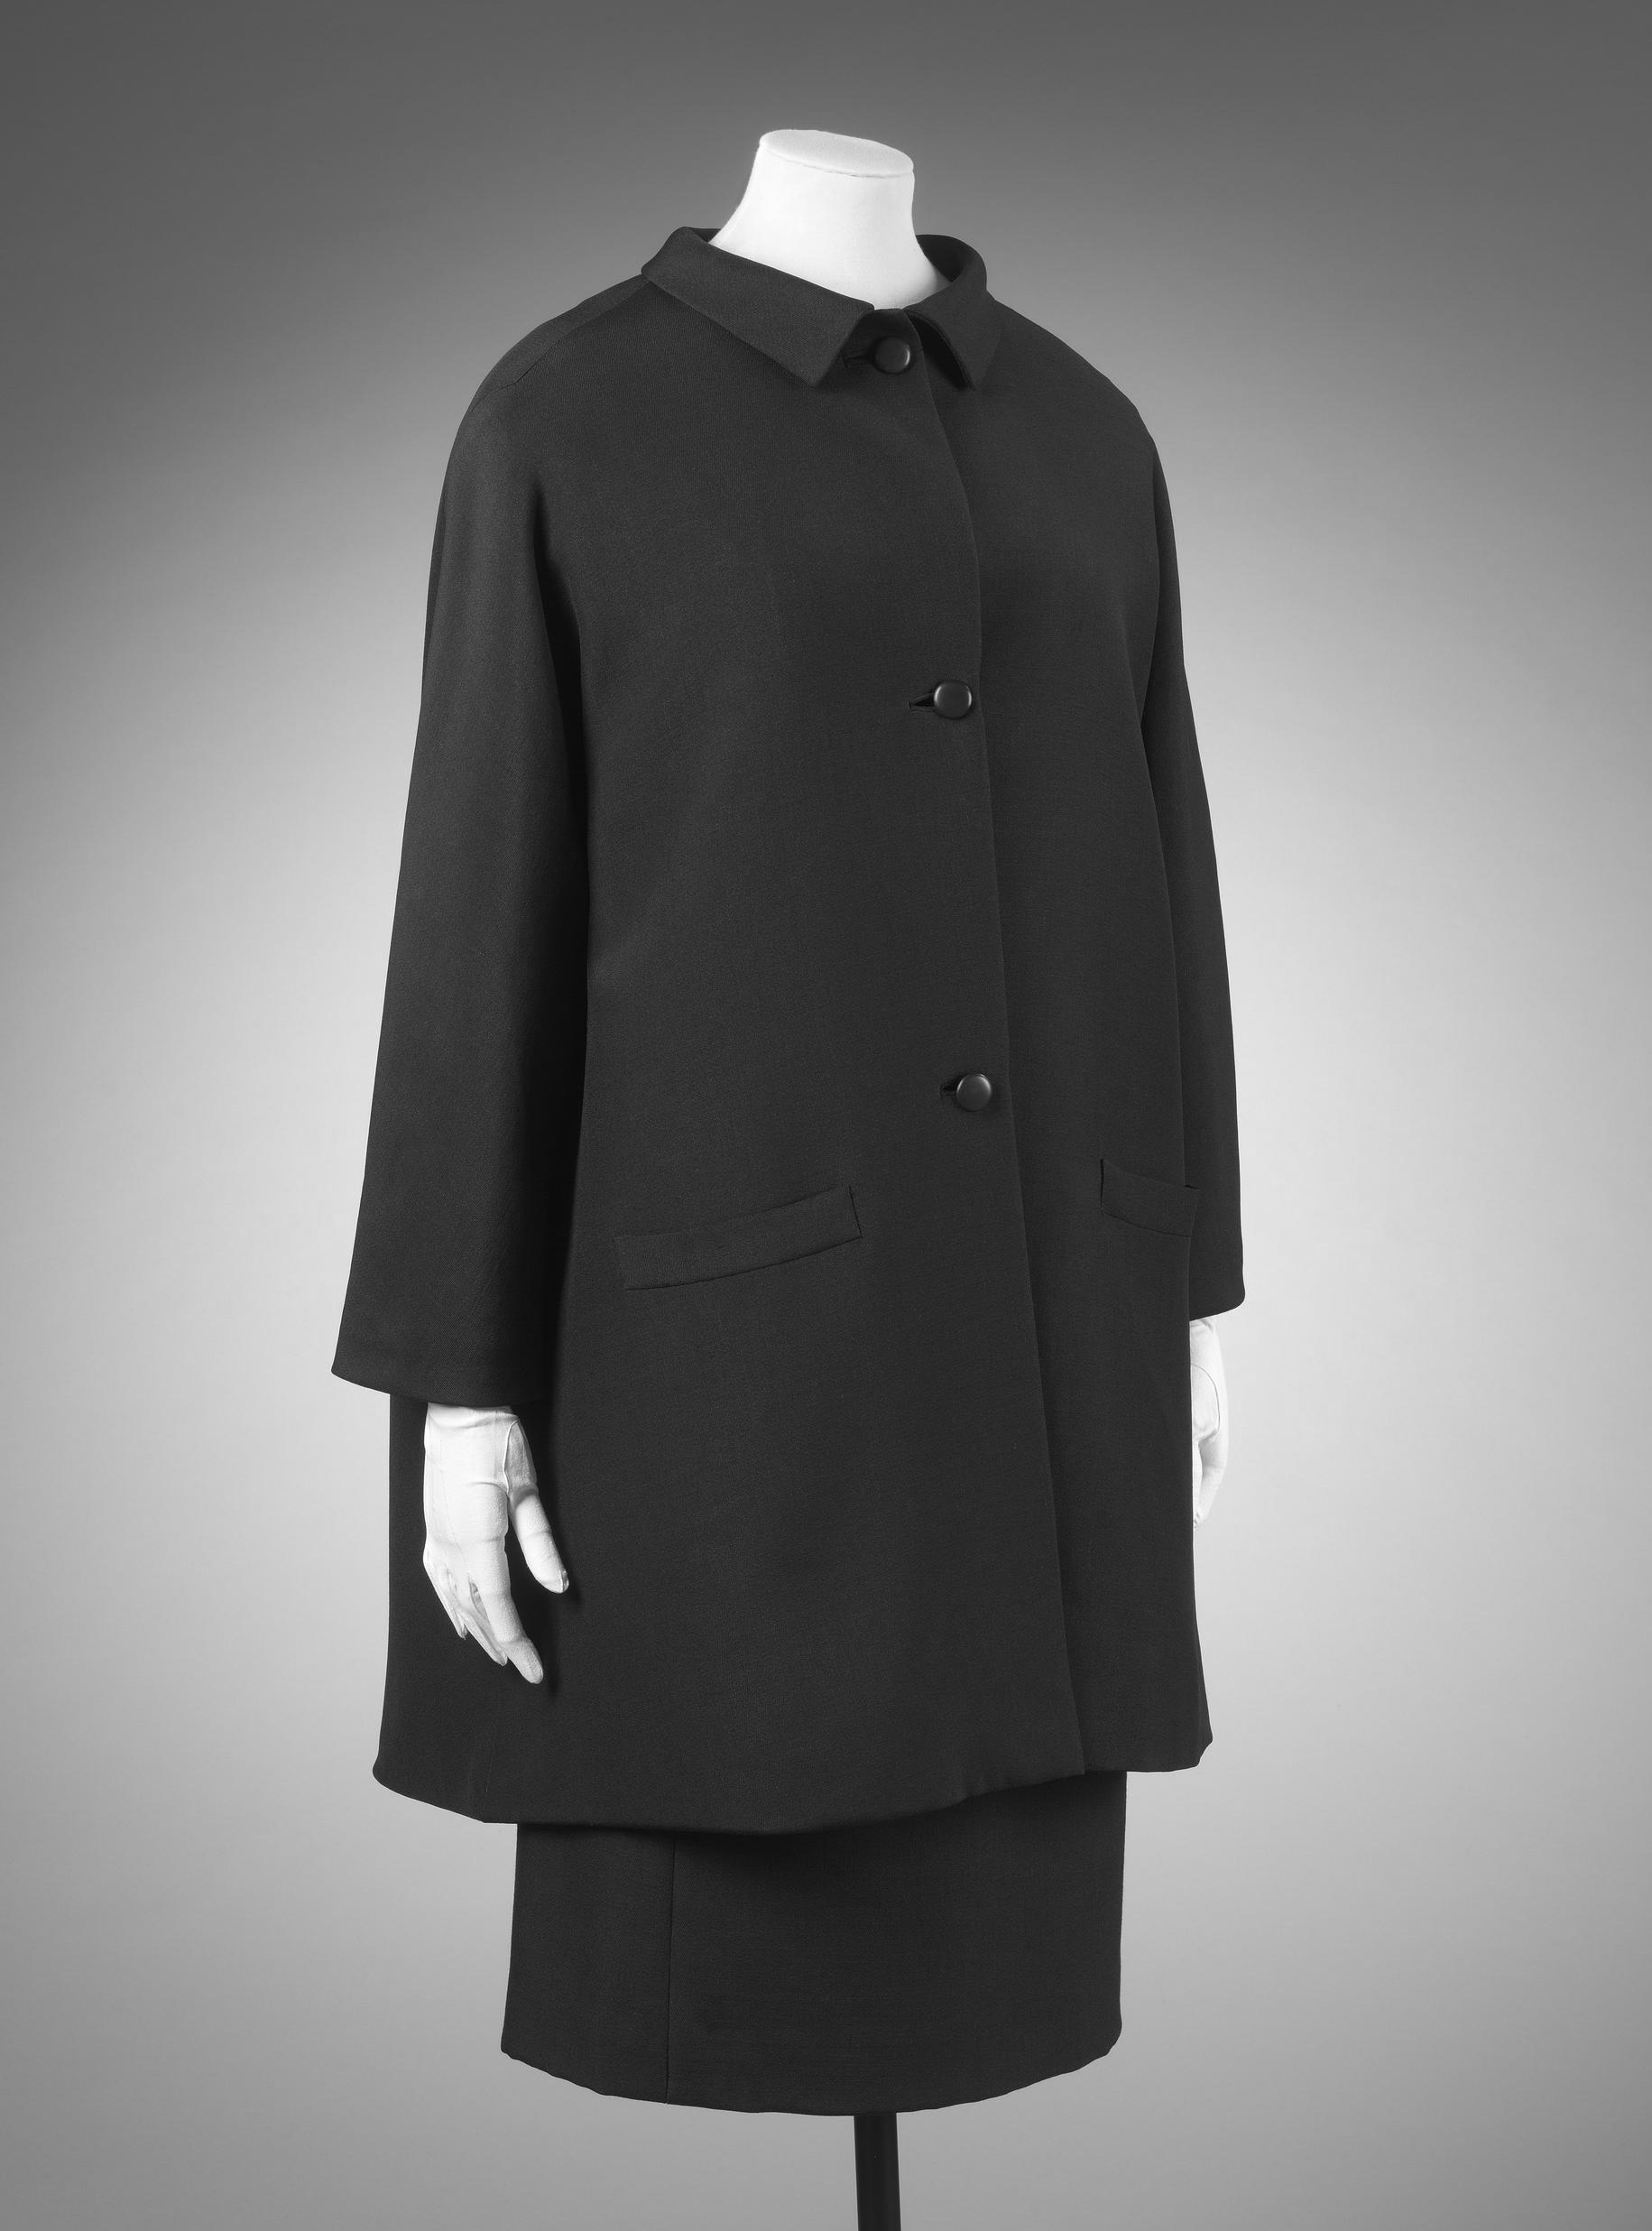 Cristobal Balenciaga: Skirt Suit, 1964 © Victoria and Albert Museum, London